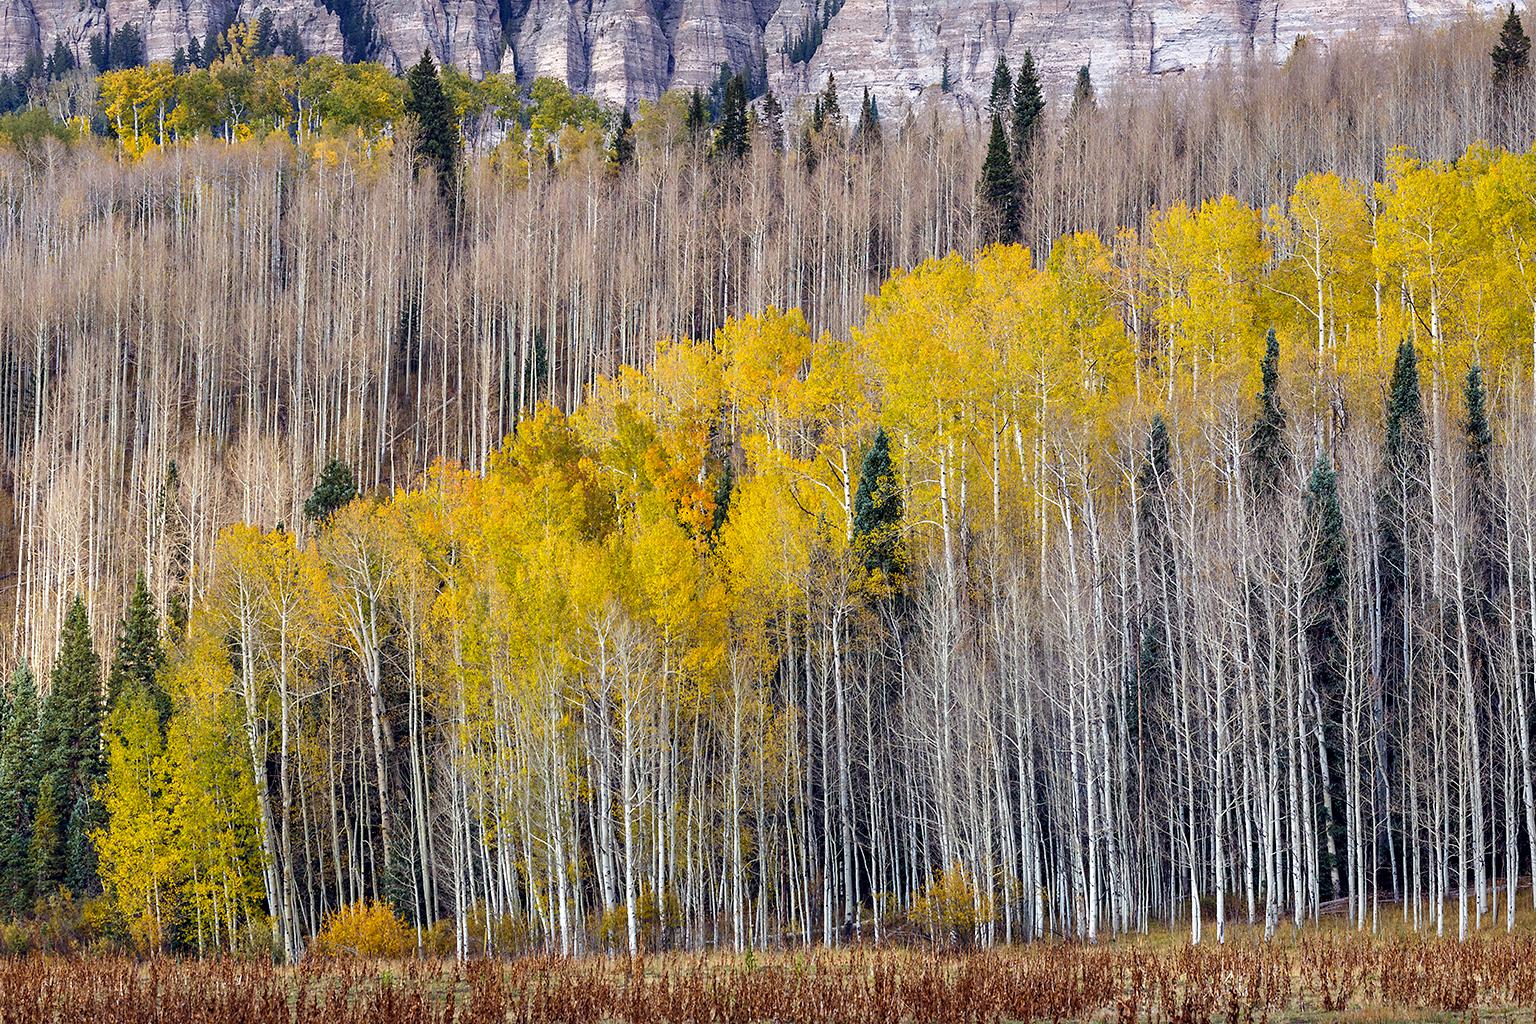 Alexandra Steedman Landscape Photograph - "Forest", Color Nature Photography, Landscape, Trees, Autumn, Yellow